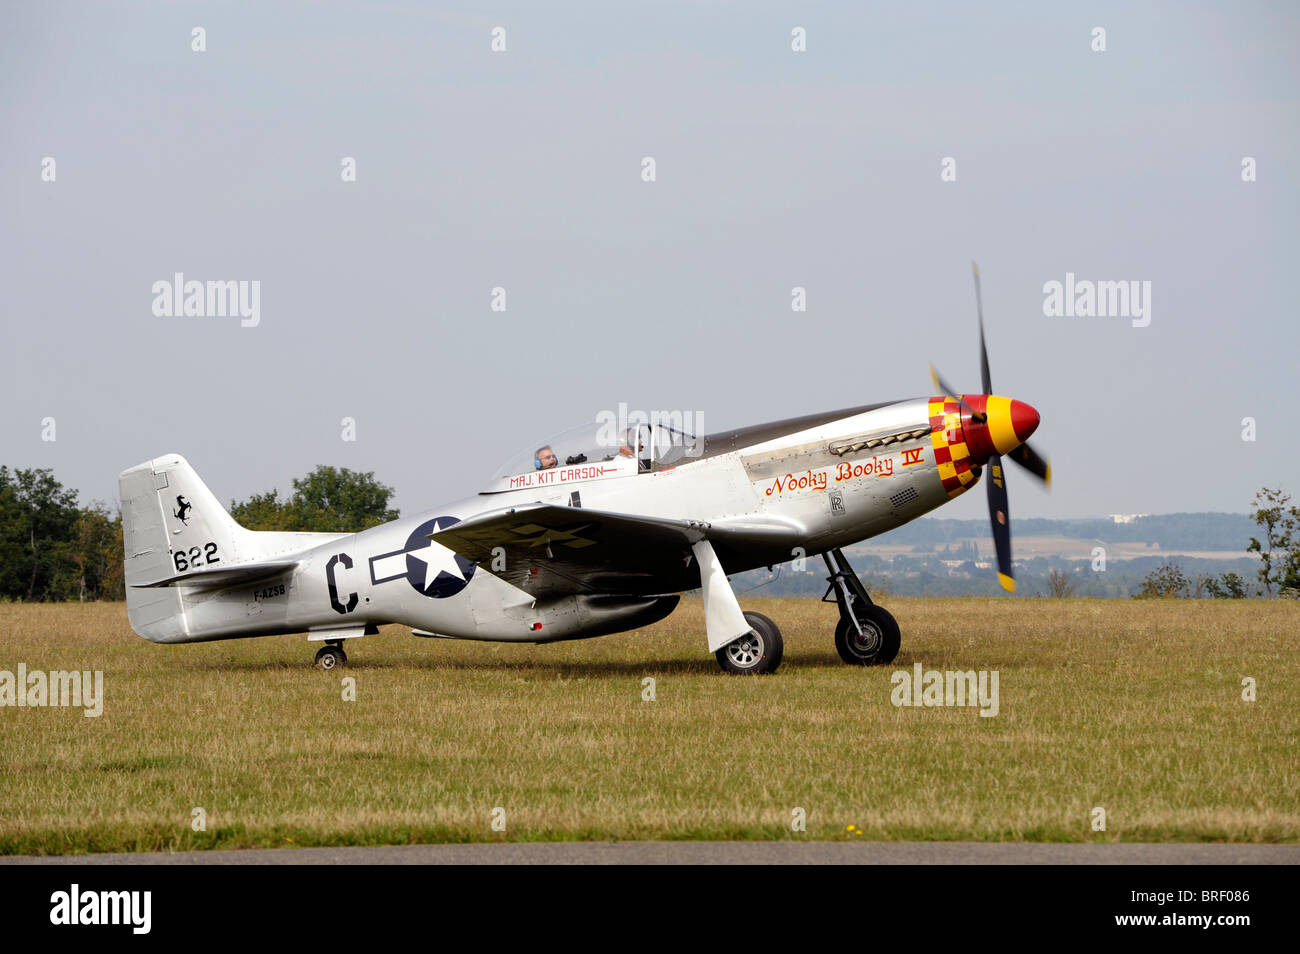 Nooky Booky IV,North American Aviation Mustang P-51D, Aerodrome de Cerny- La Ferte-Alais, Amicale Jean-Baptiste Salis vicino a Parigi Foto Stock